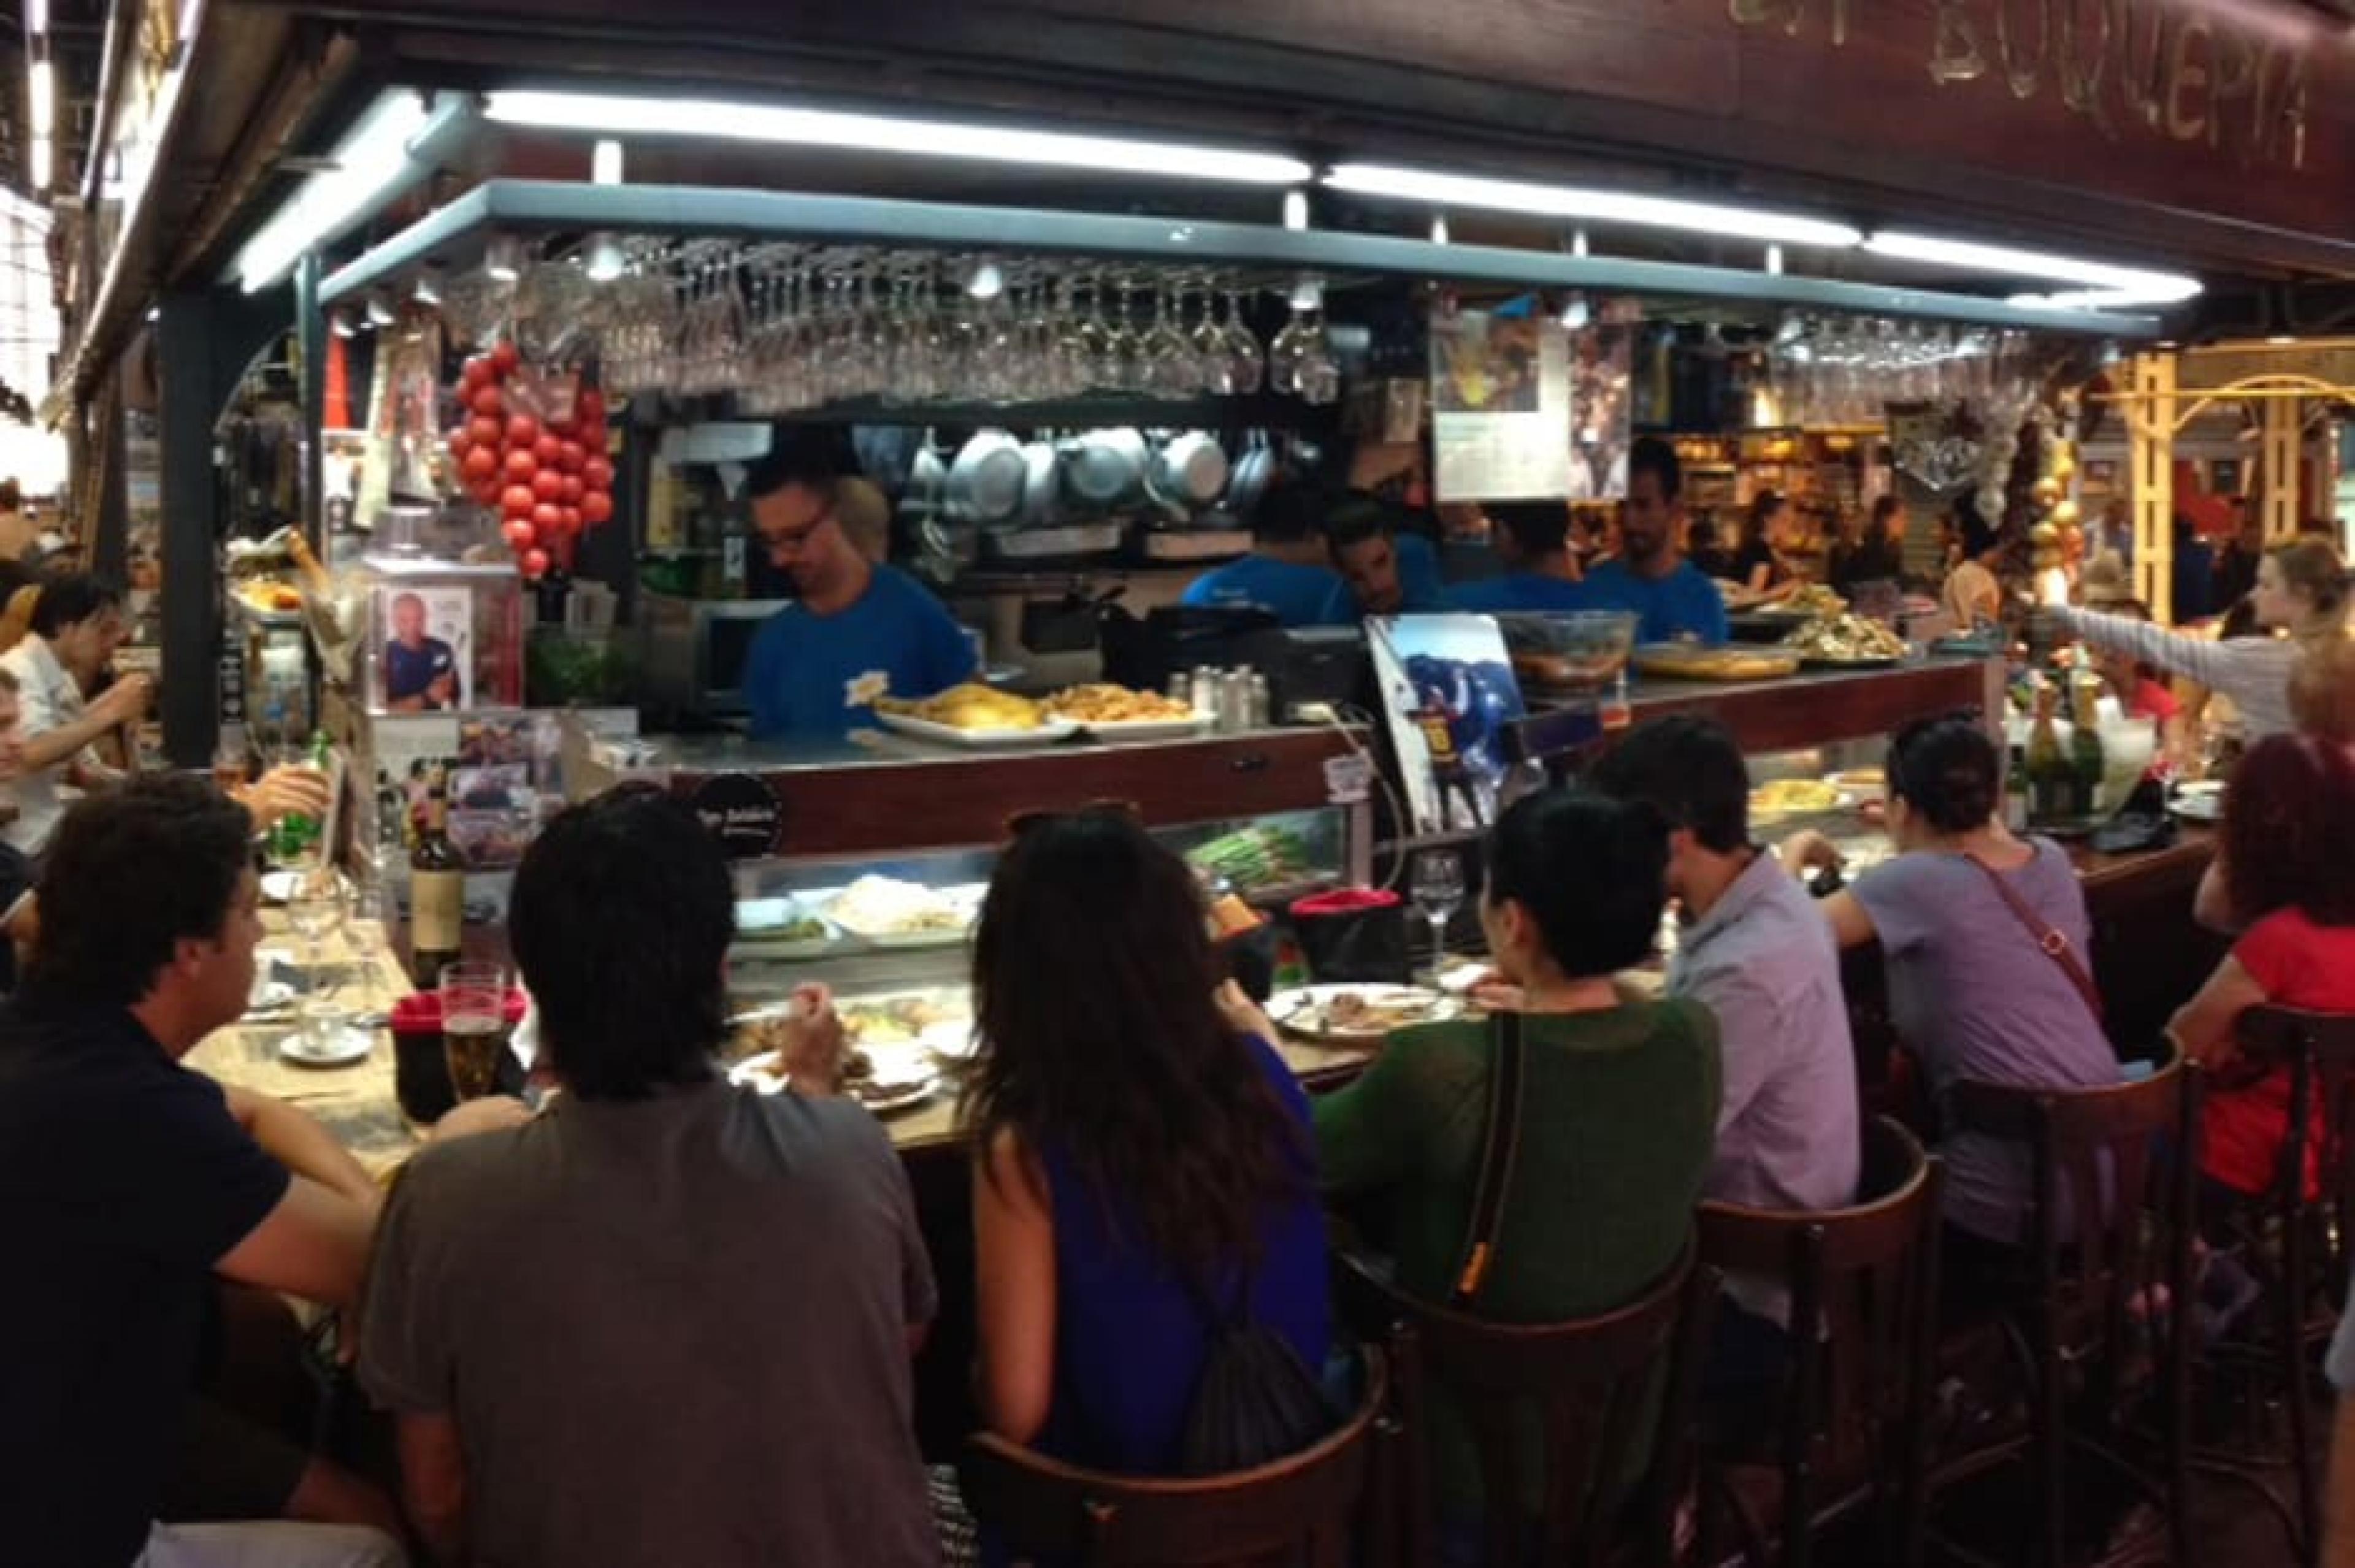 Dinning Area at El Quim de la Boqueria, Barcelona, Spain